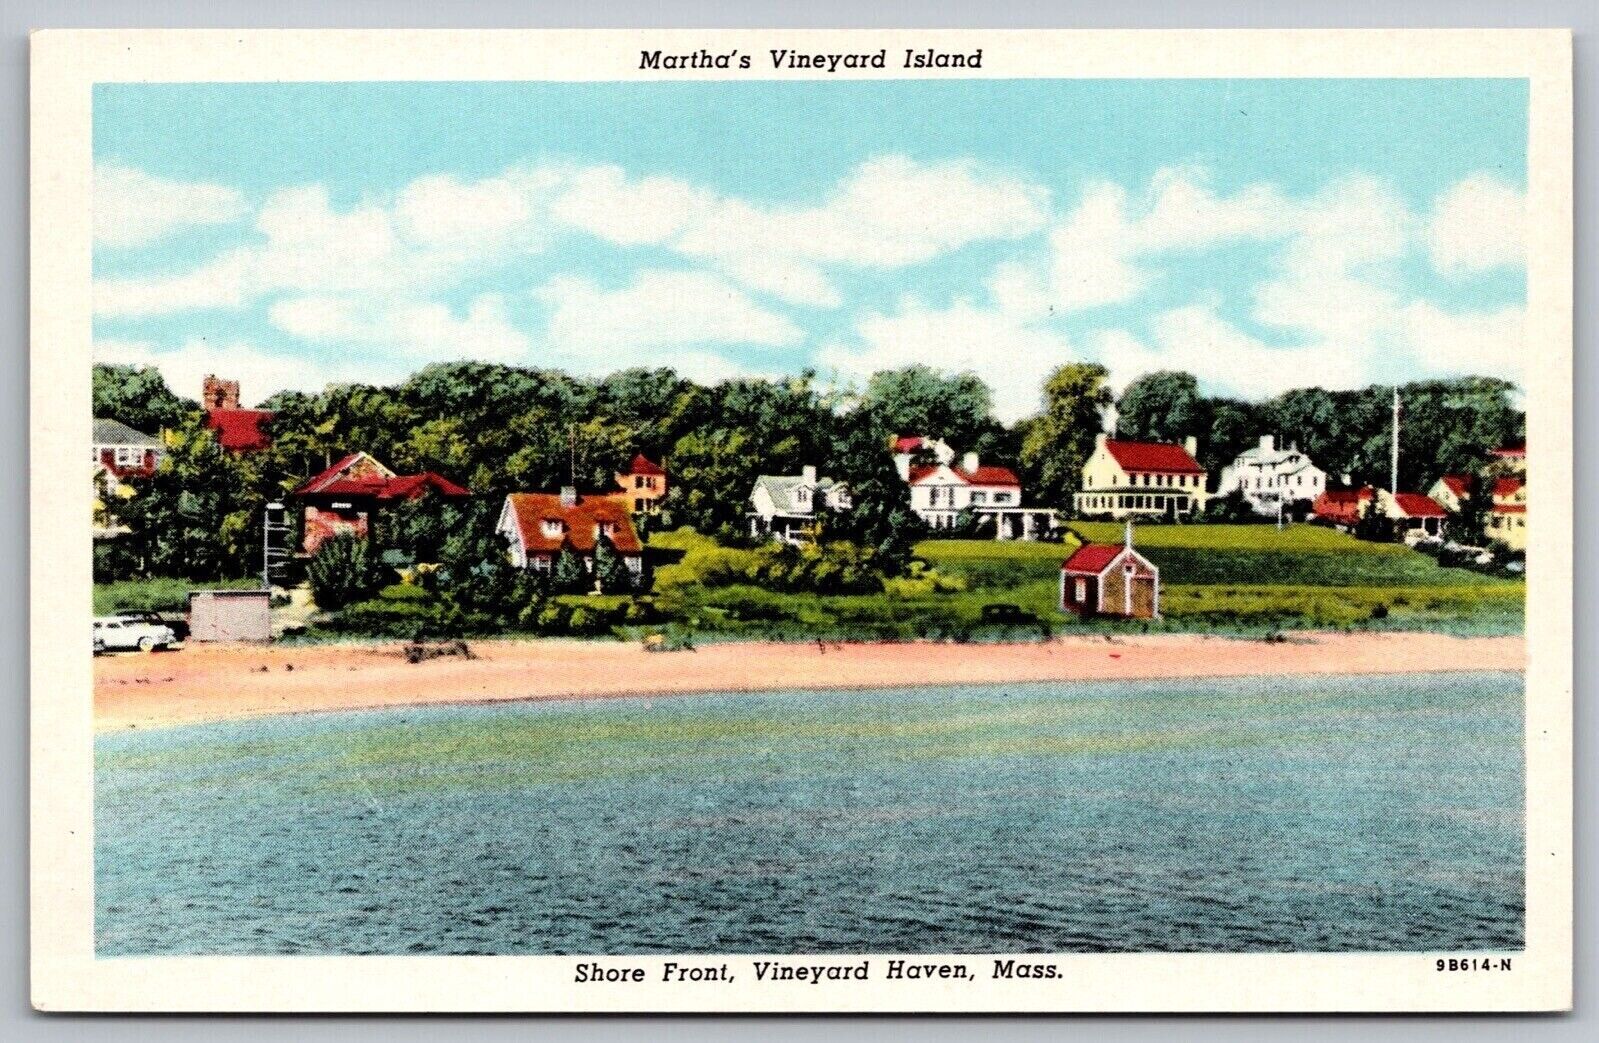 Vineyard Haven Massachusetts Ma Shore Front Marthas Vineyard Island Unp Postcard